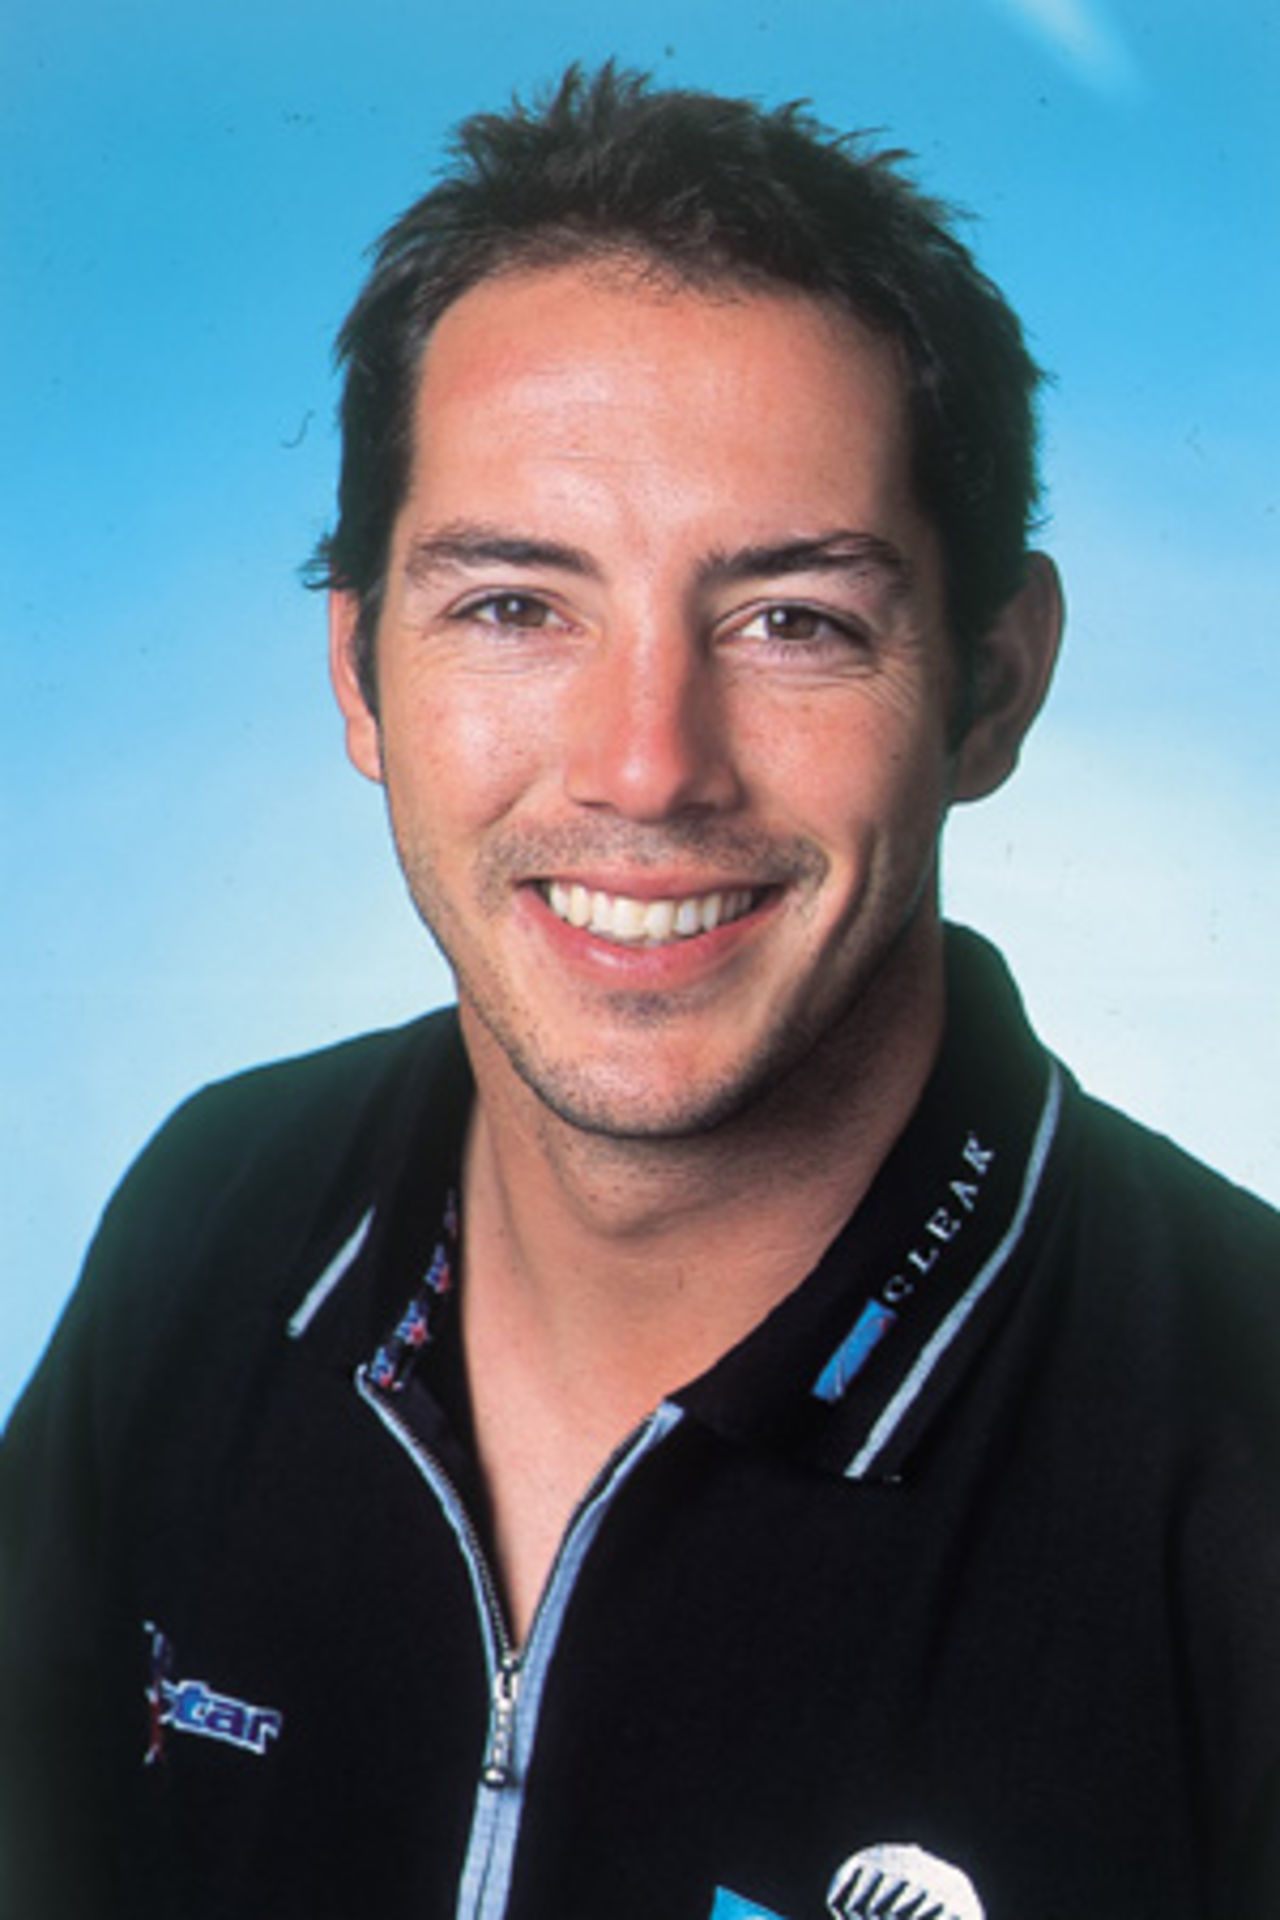 Portrait of Adam Parore - New Zealand player in the 2001/02 season.